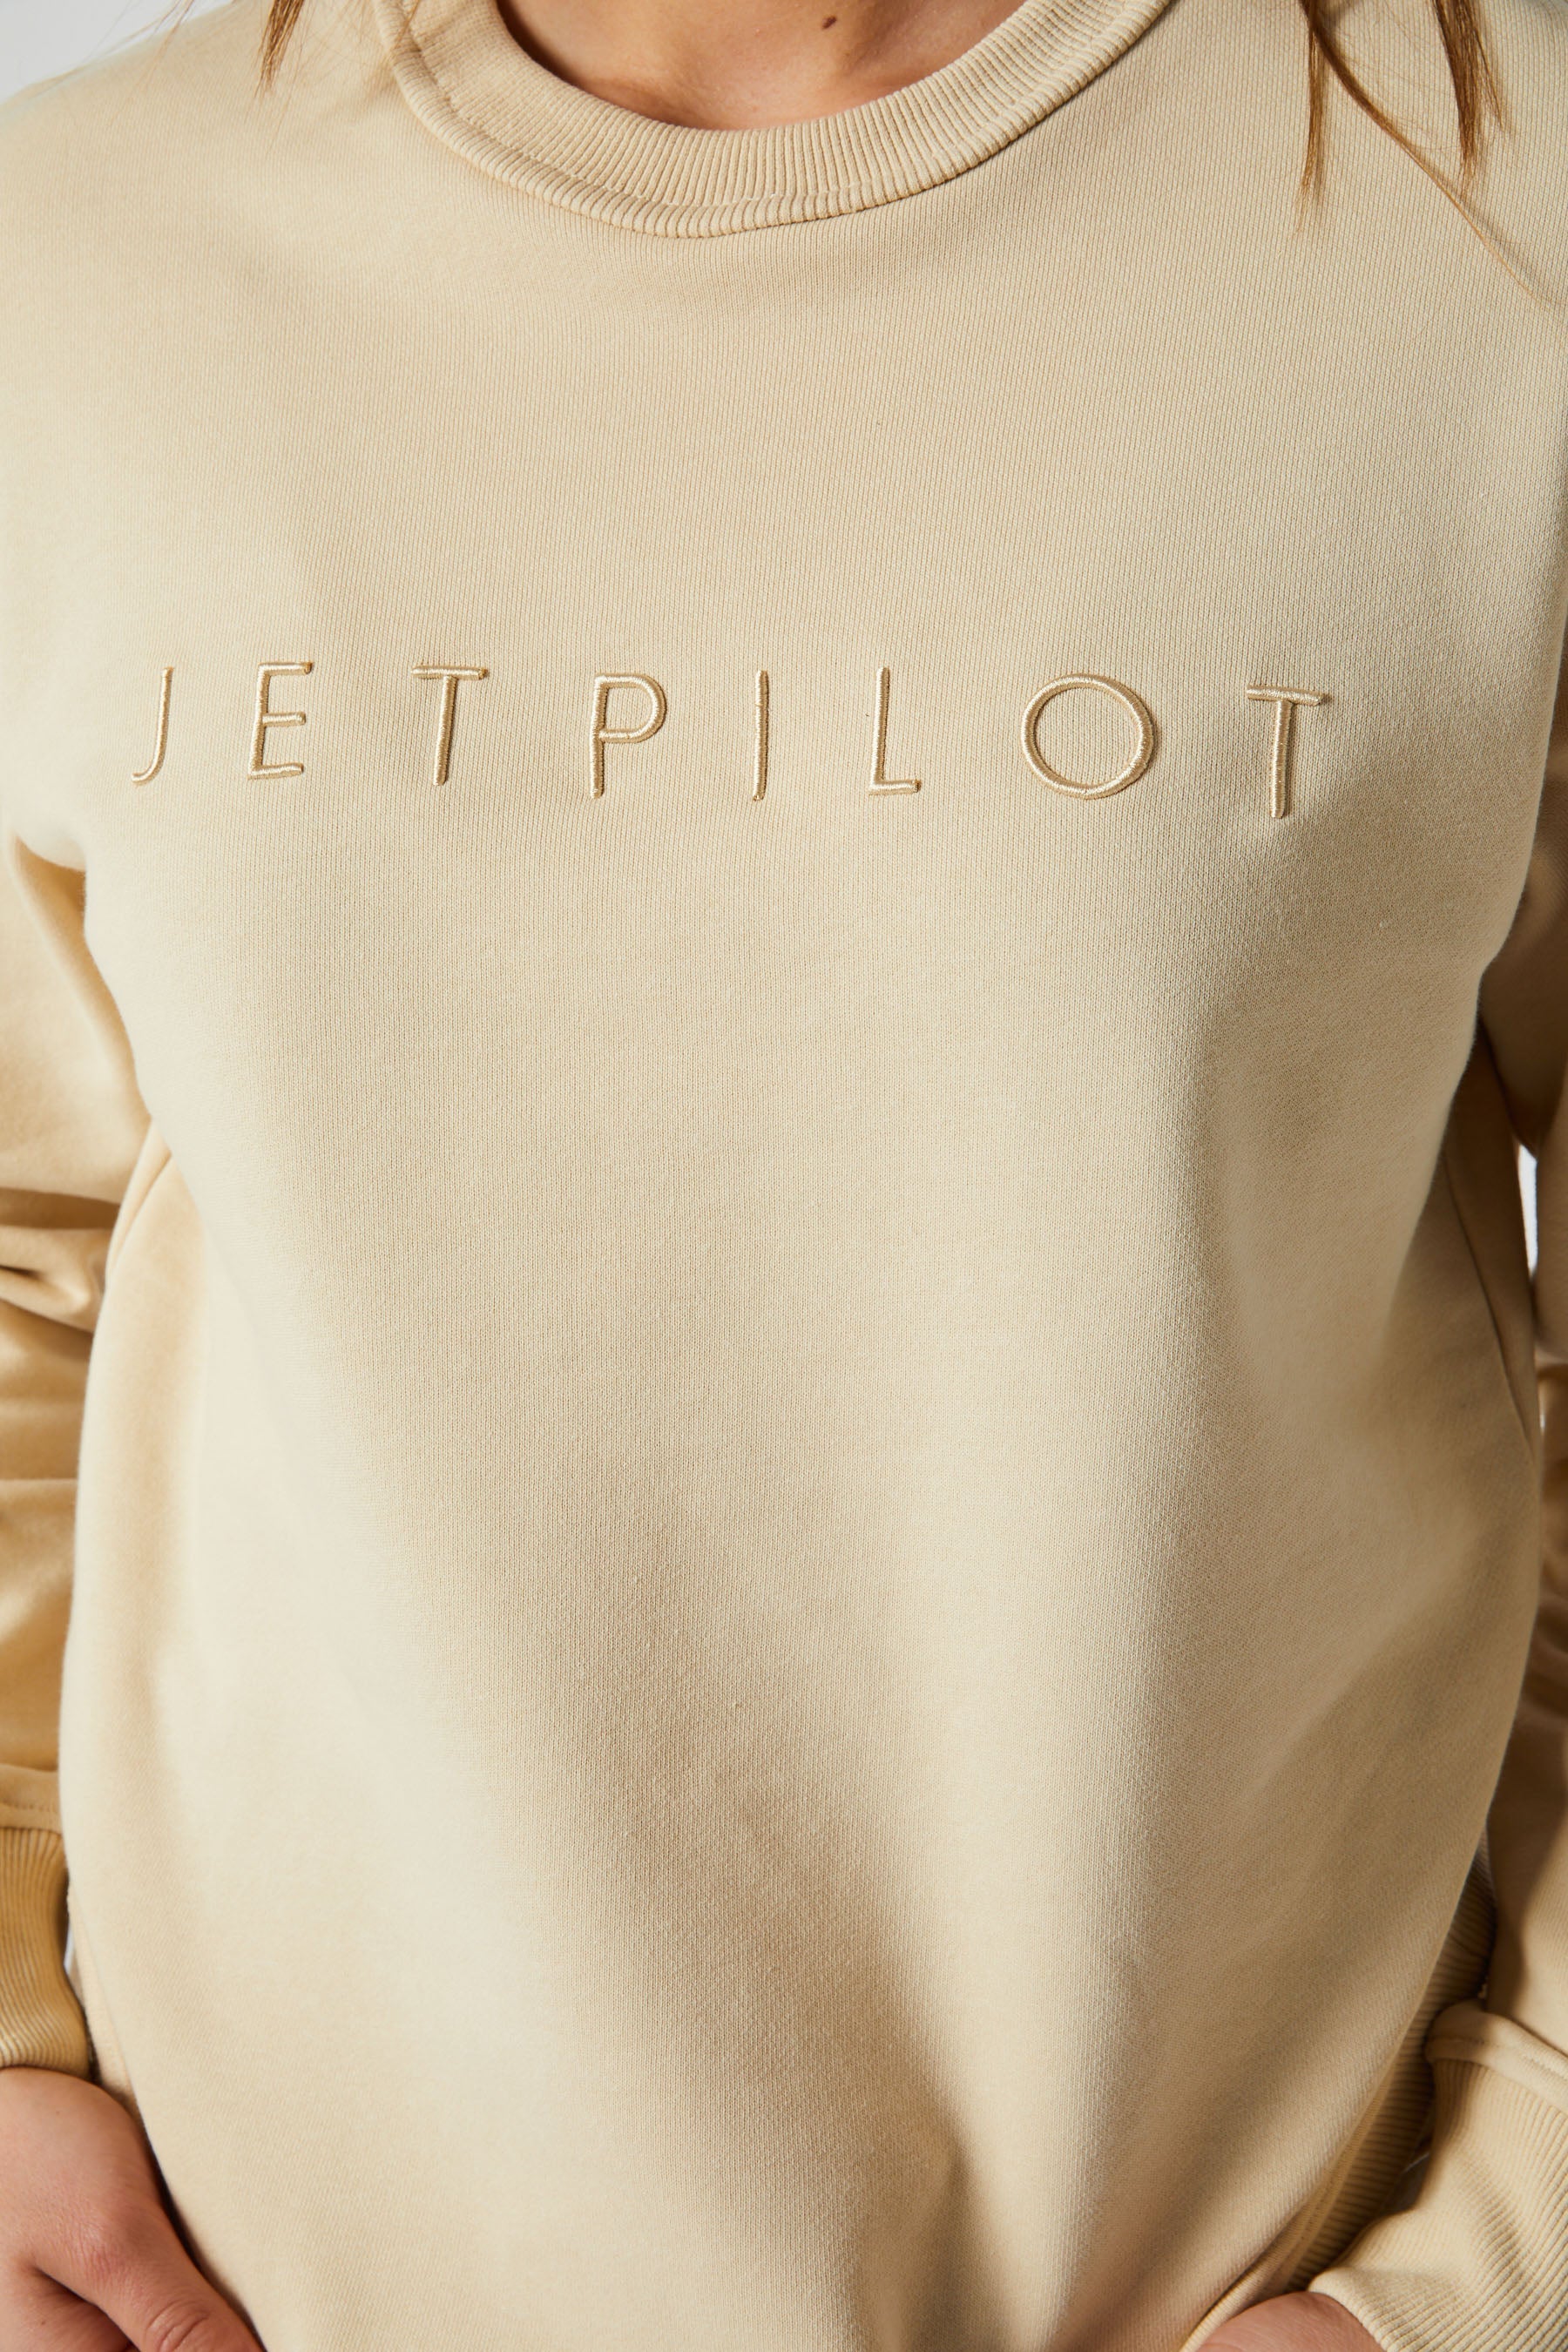 Jetpilot Simple Ladies Crew - Tan